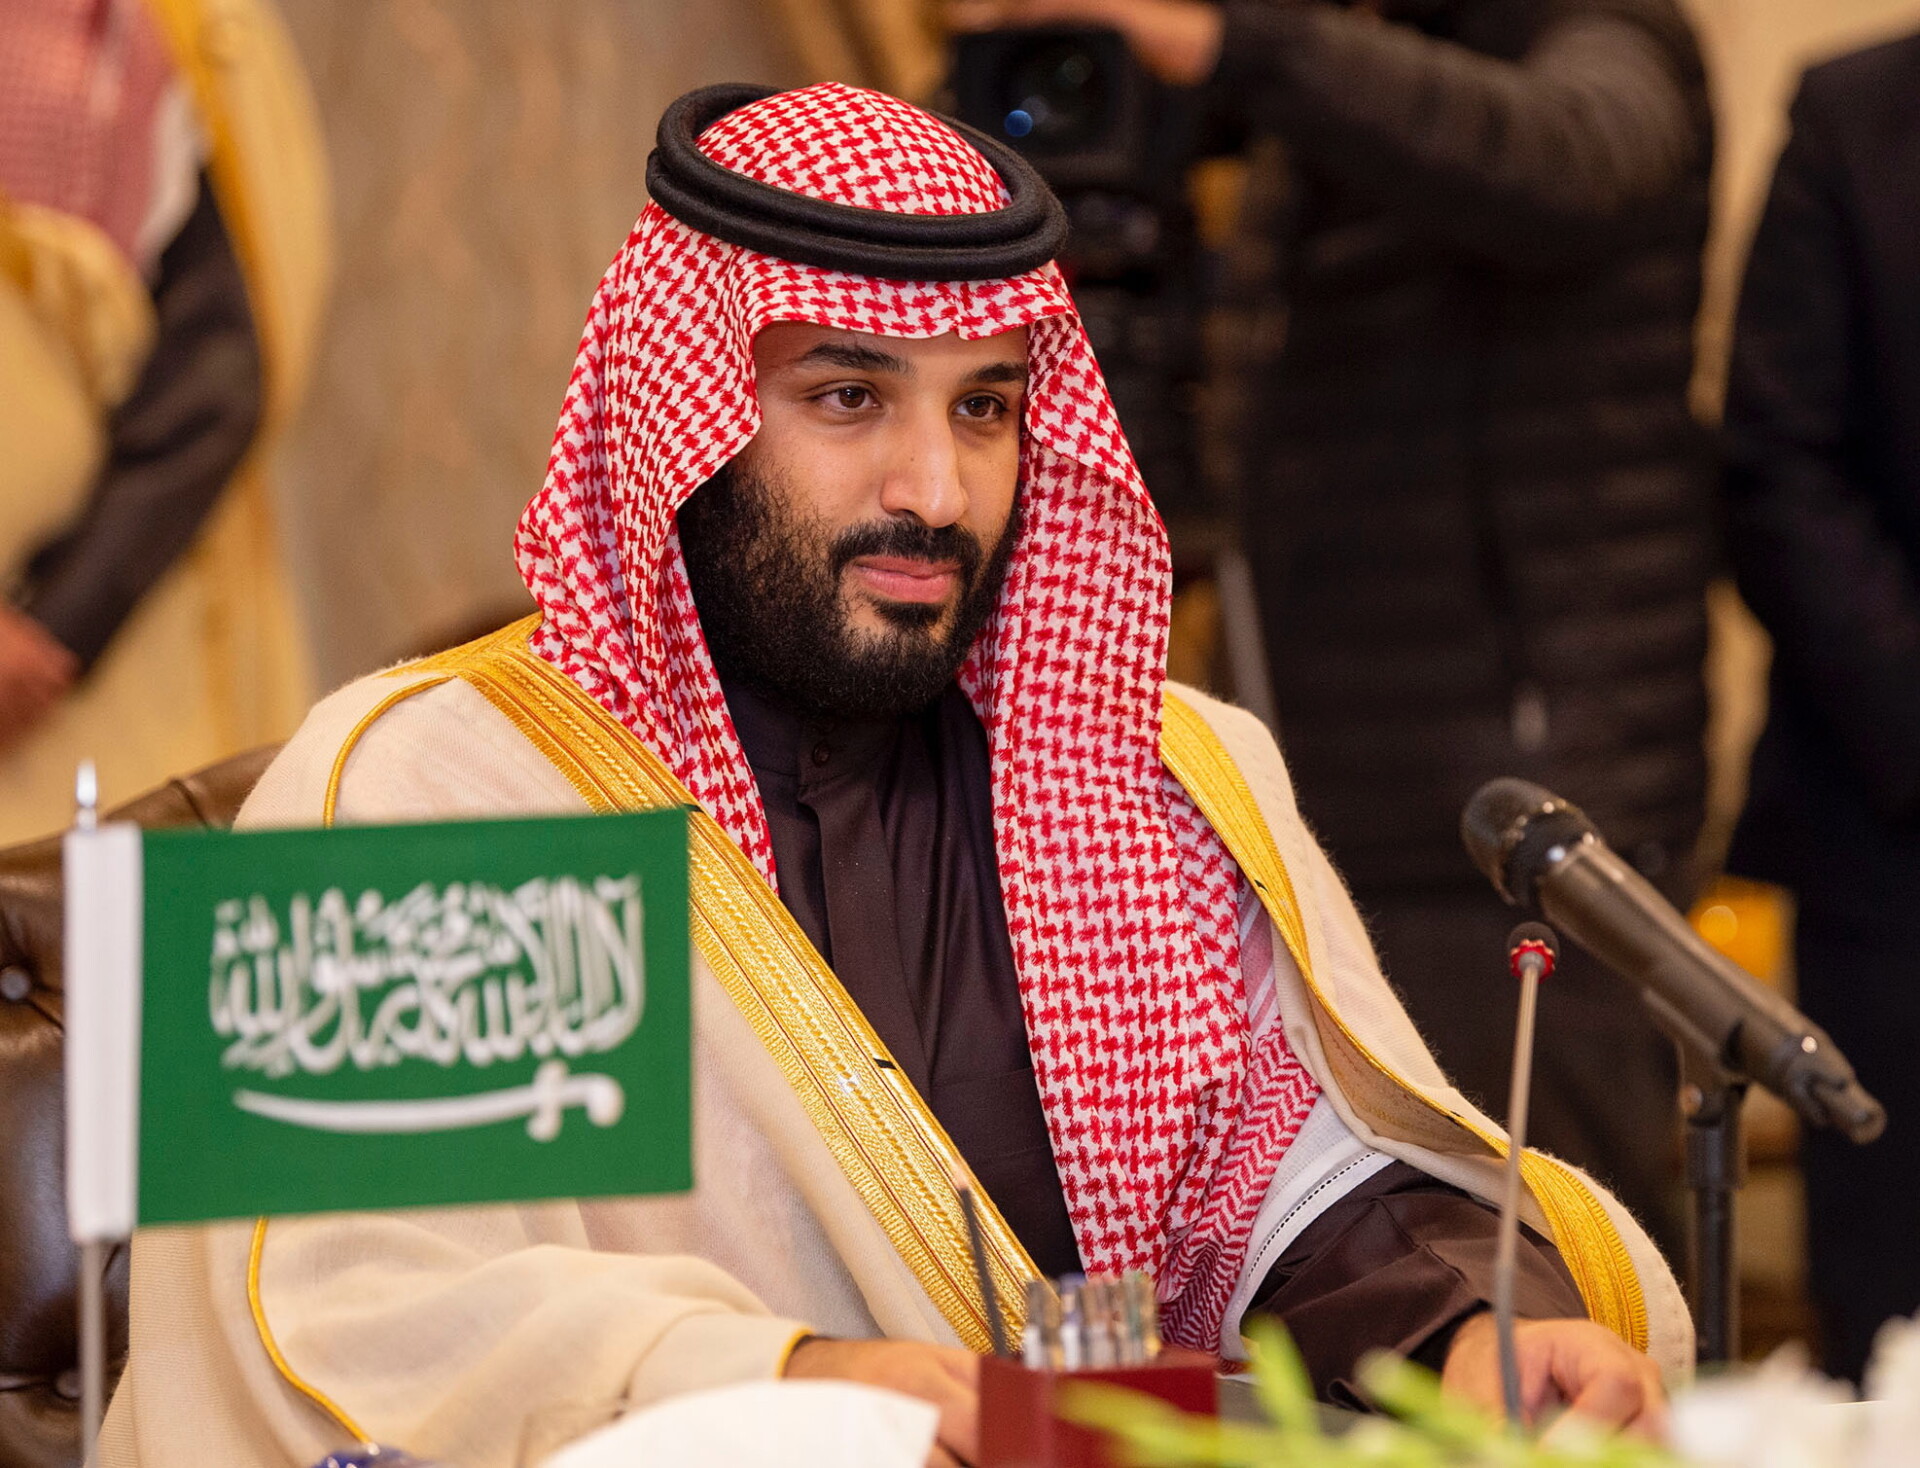 O διάδοχος του θρόνου της Σαουδικής Αραβίας, Mοχάμεντ Μπιν Σαλμάν @EPA/BANDAR ALGALOUD HANDOUT HANDOUT EDITORIAL USE ONLY/NO SALES